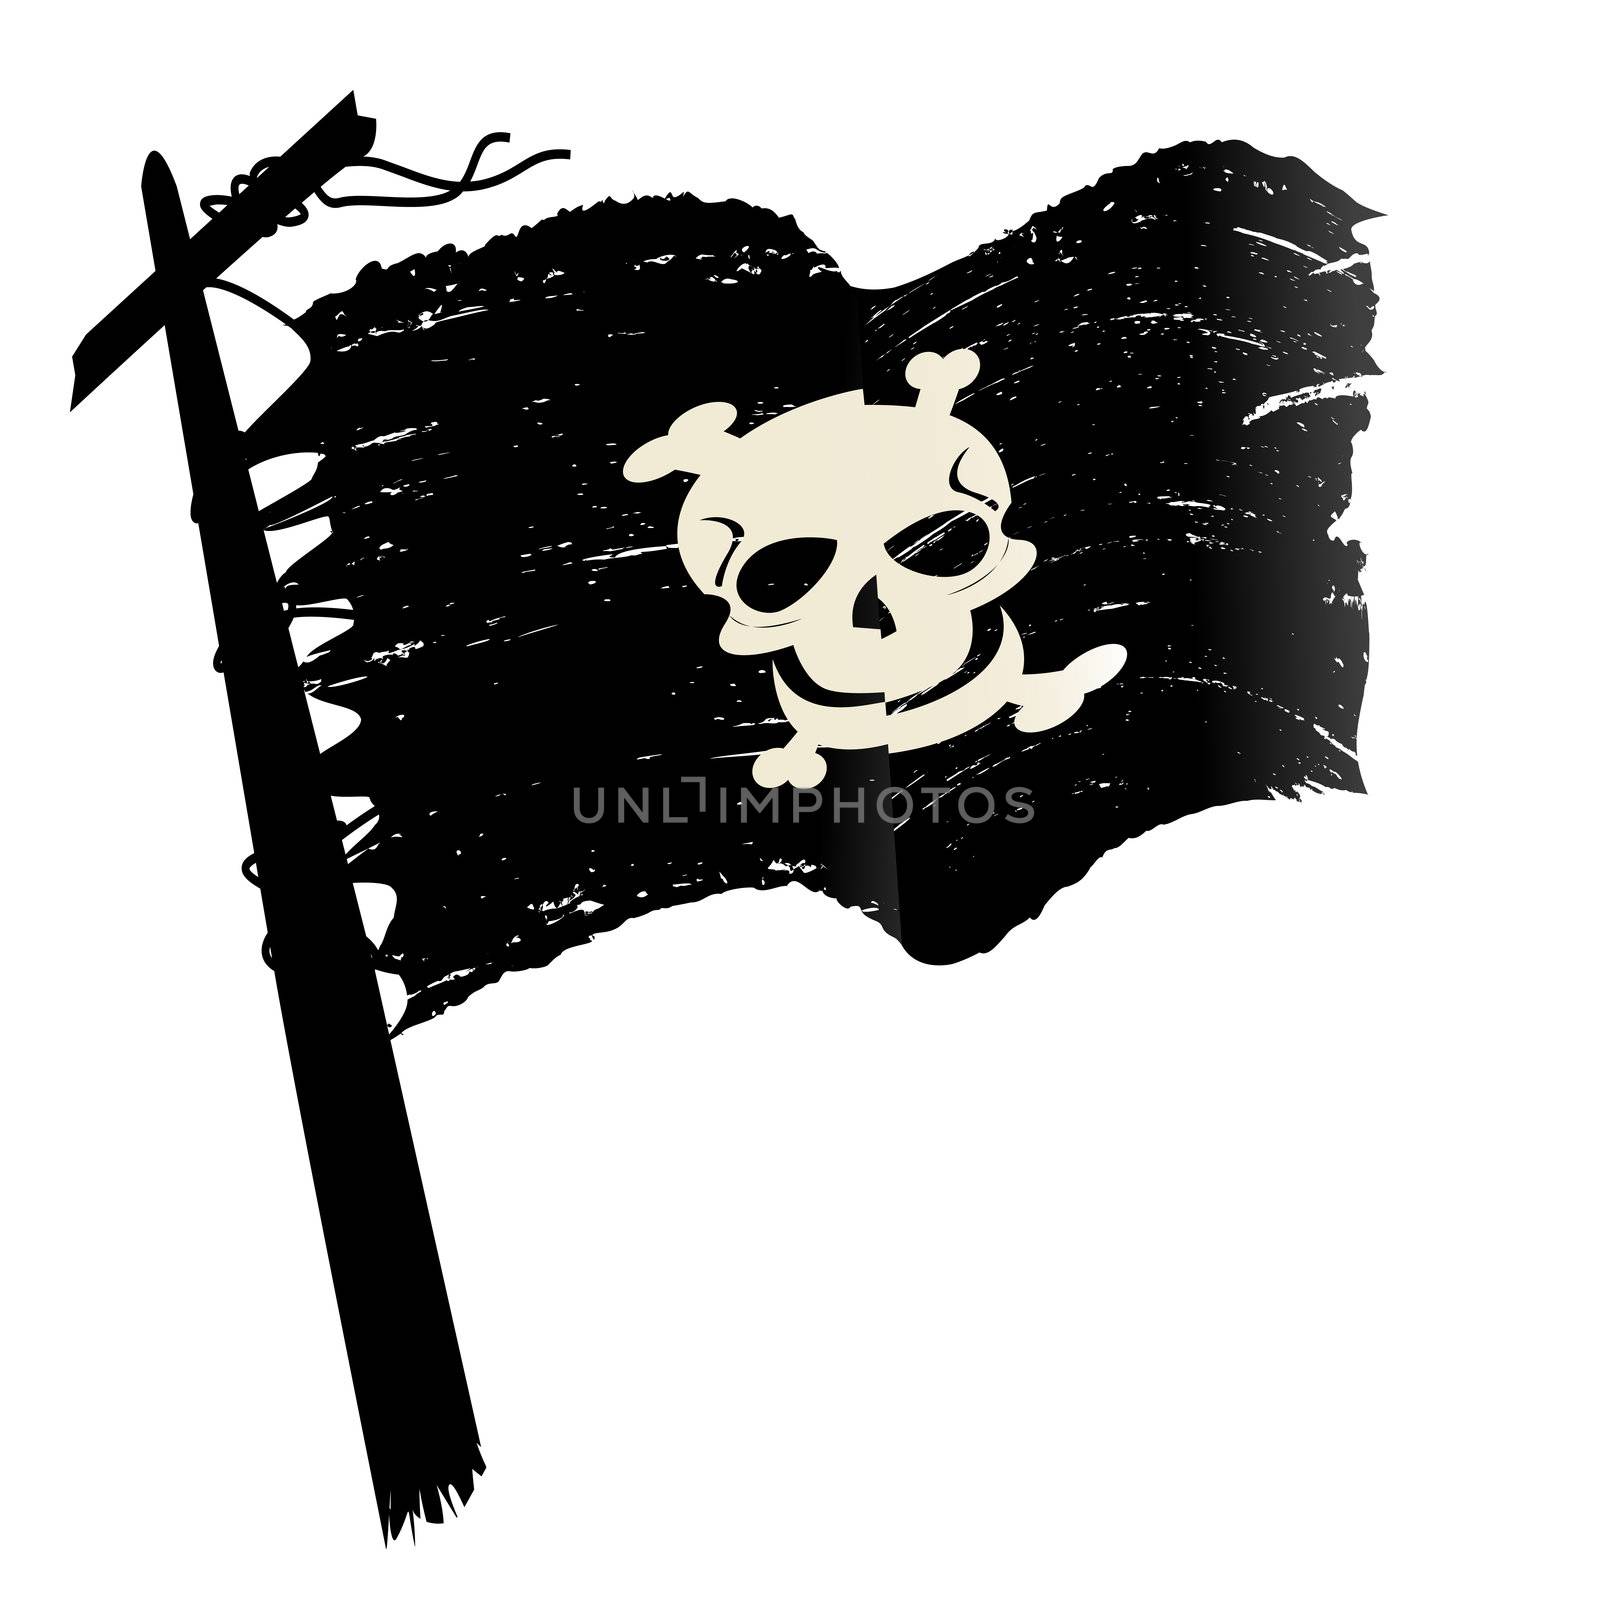 Grunge pirate flag by Lirch